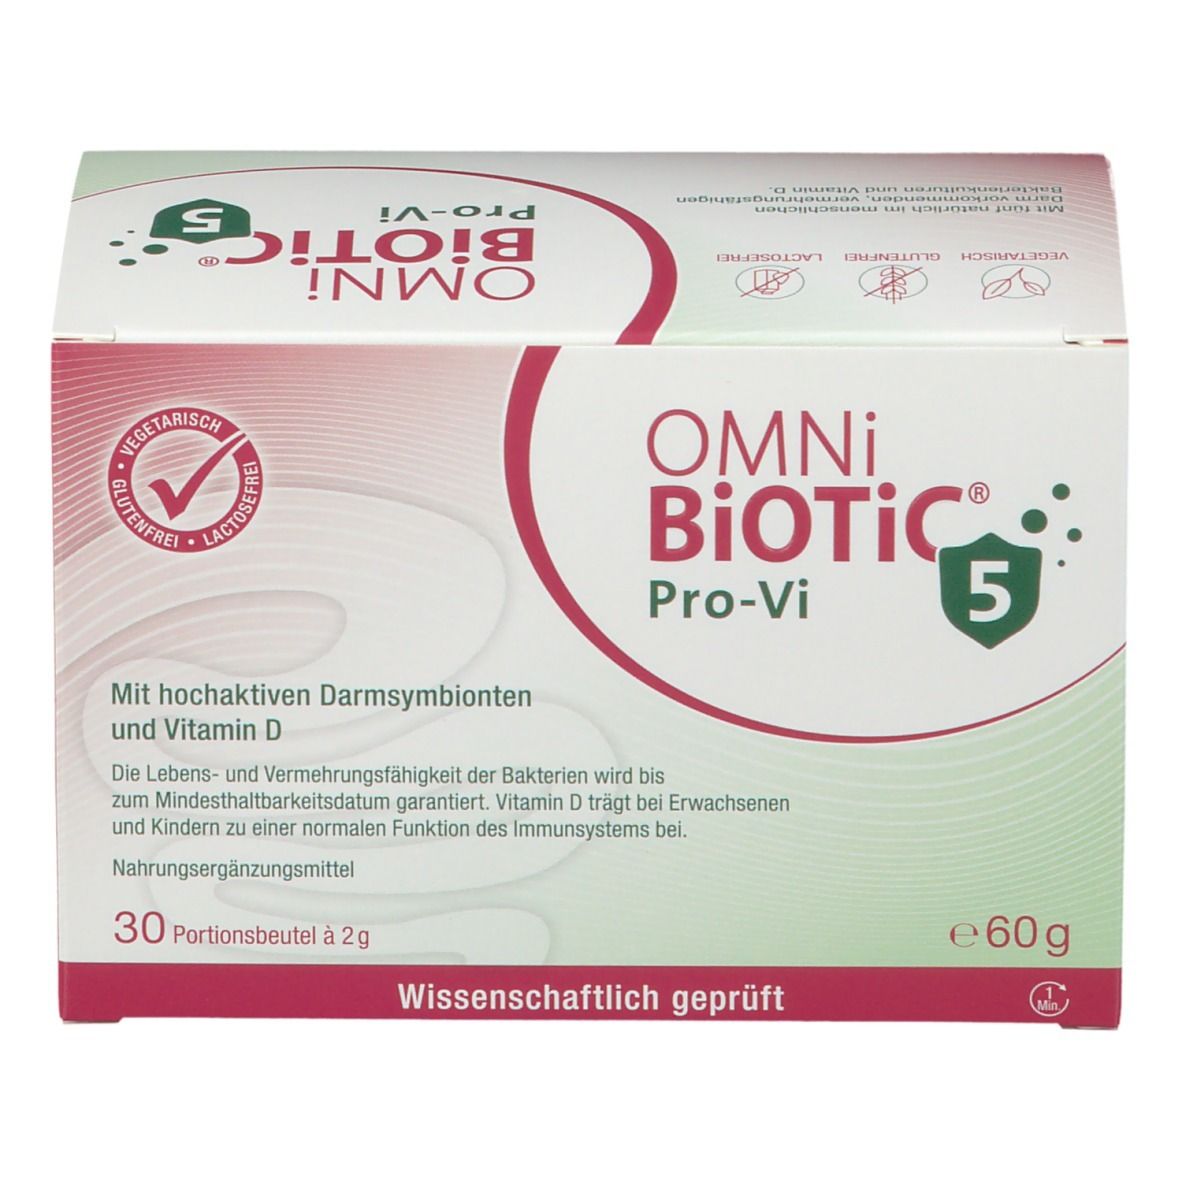 OMNi-BiOTiC® Pro-Vi 5